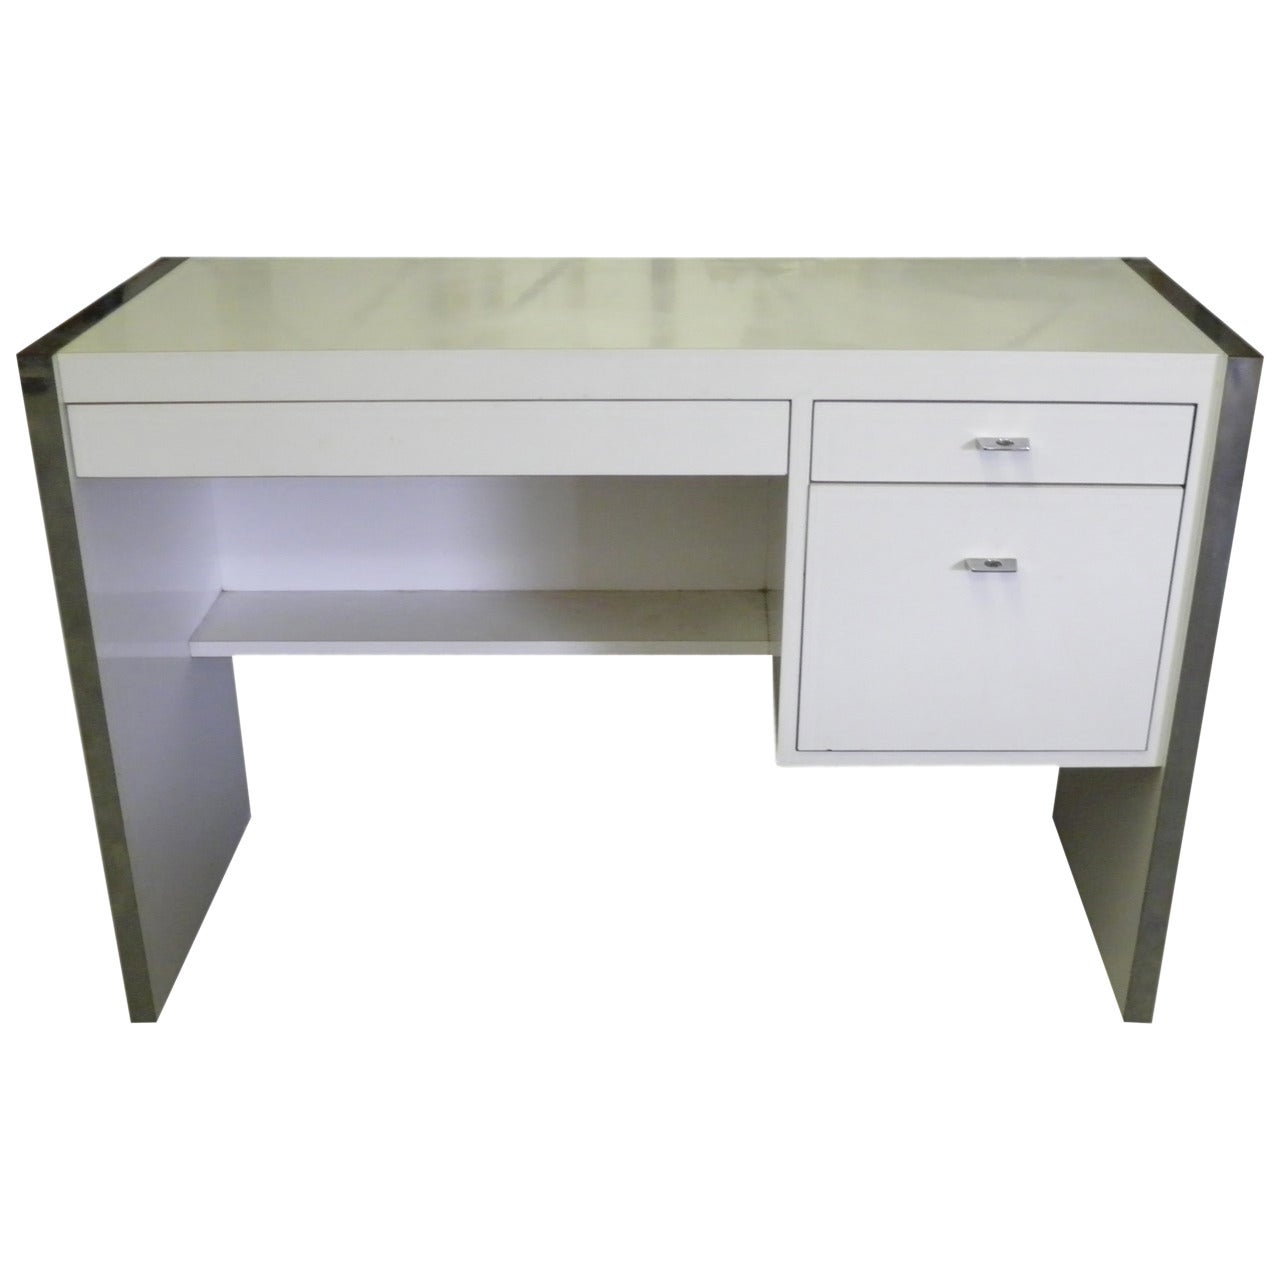 1960s Modern Desk with File Ala Milo Baughman Minimal Streamlined Design For Sale